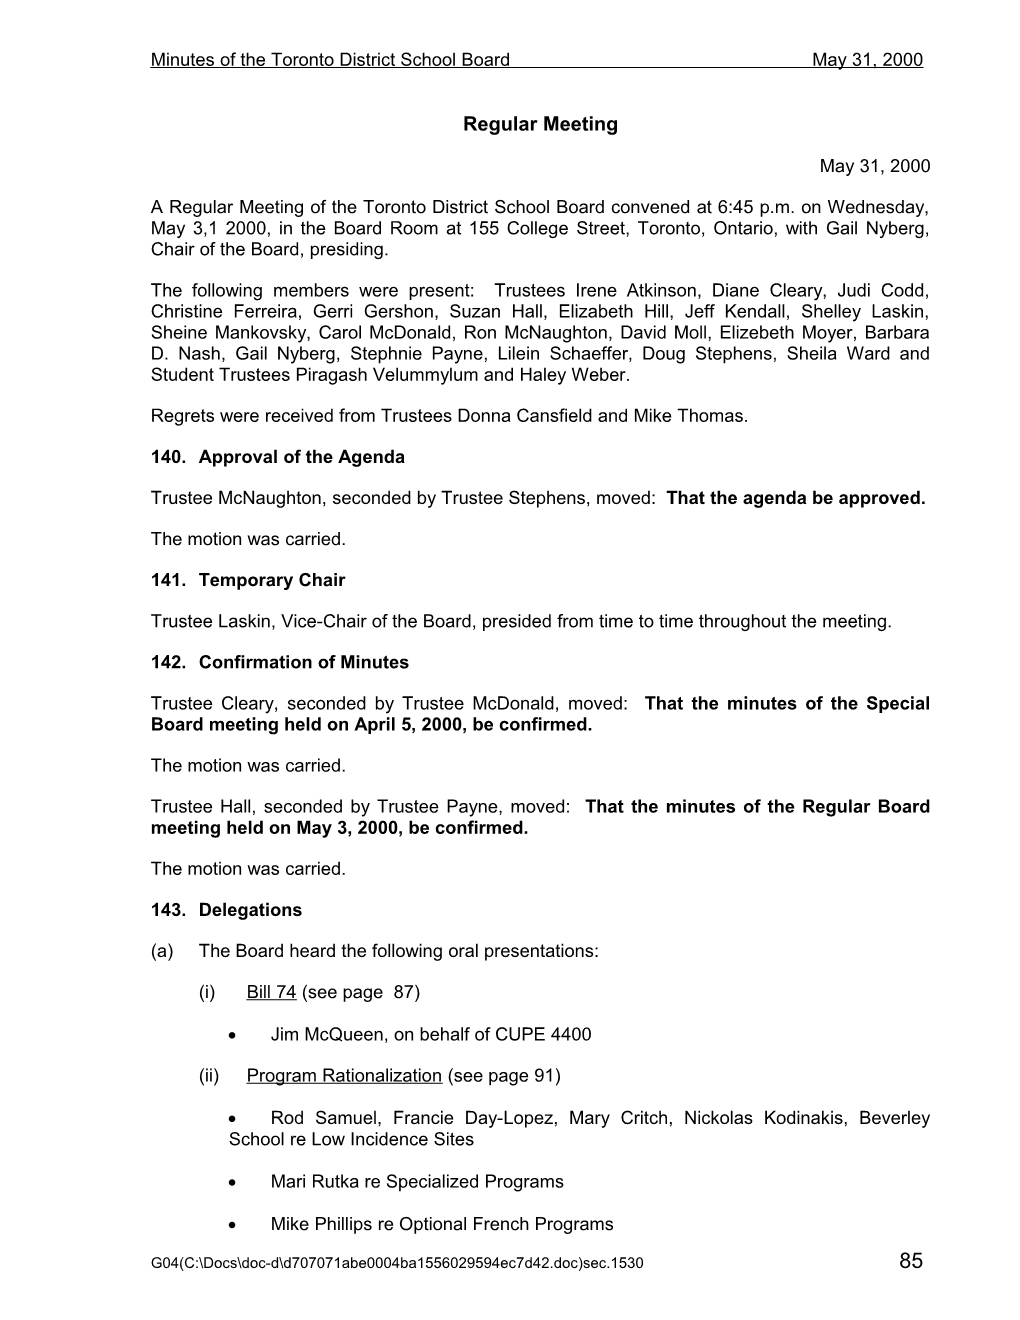 Minutes of the Toronto District School Boardmay 31, 2000